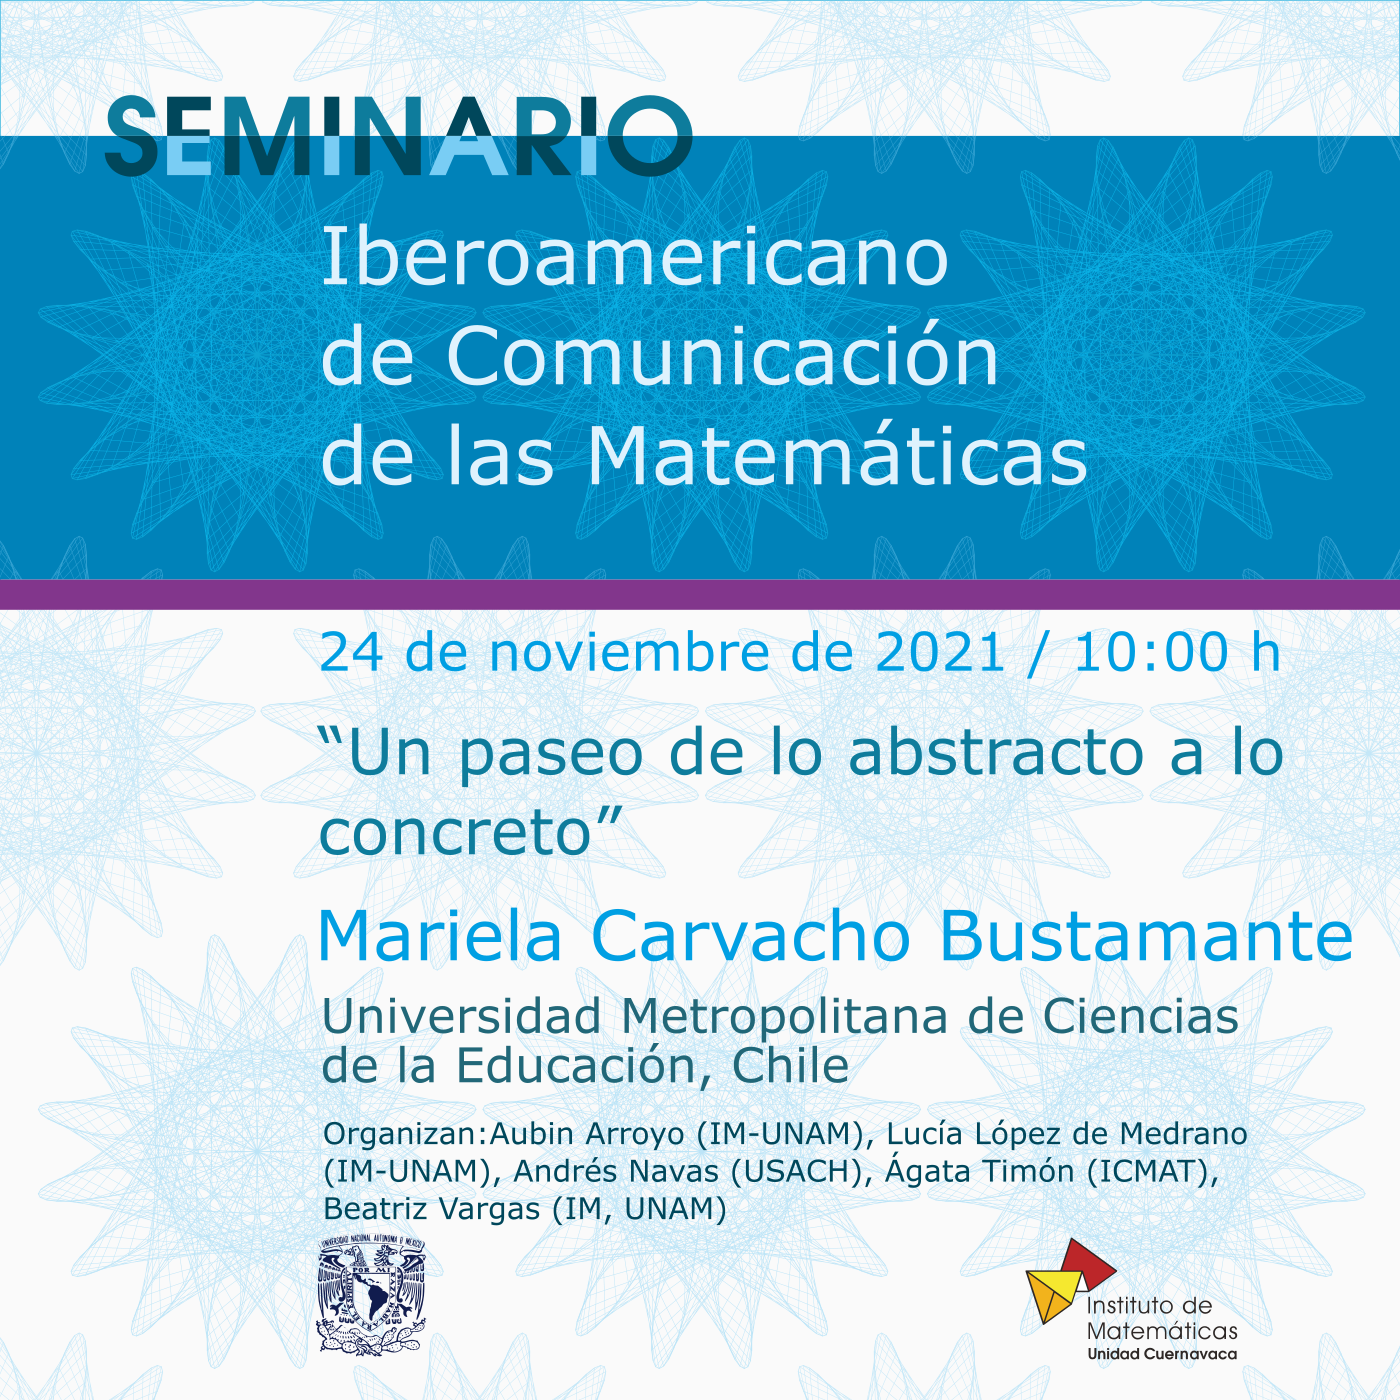 Seminario Iberoamericano de Comunicación de las Matemáticas / 24 de noviembre